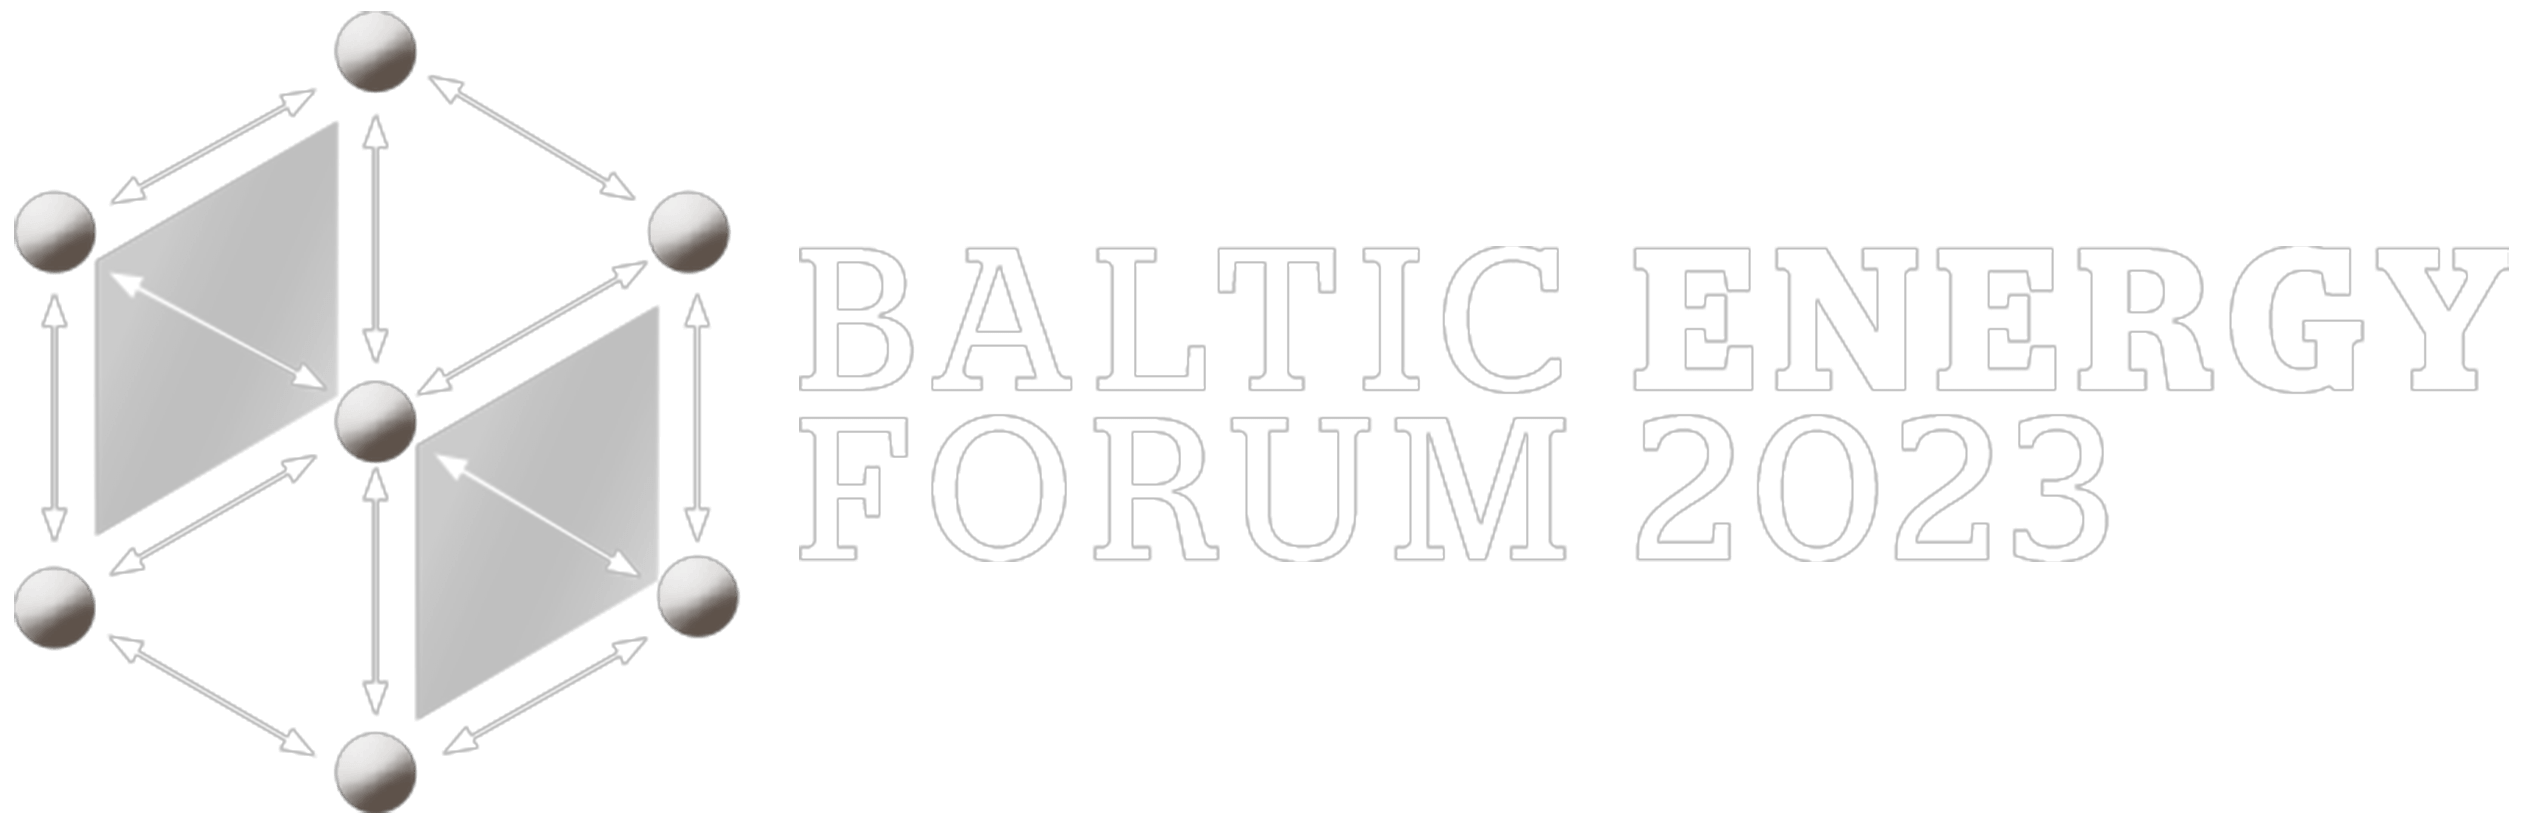 Baltic energy forum 2023